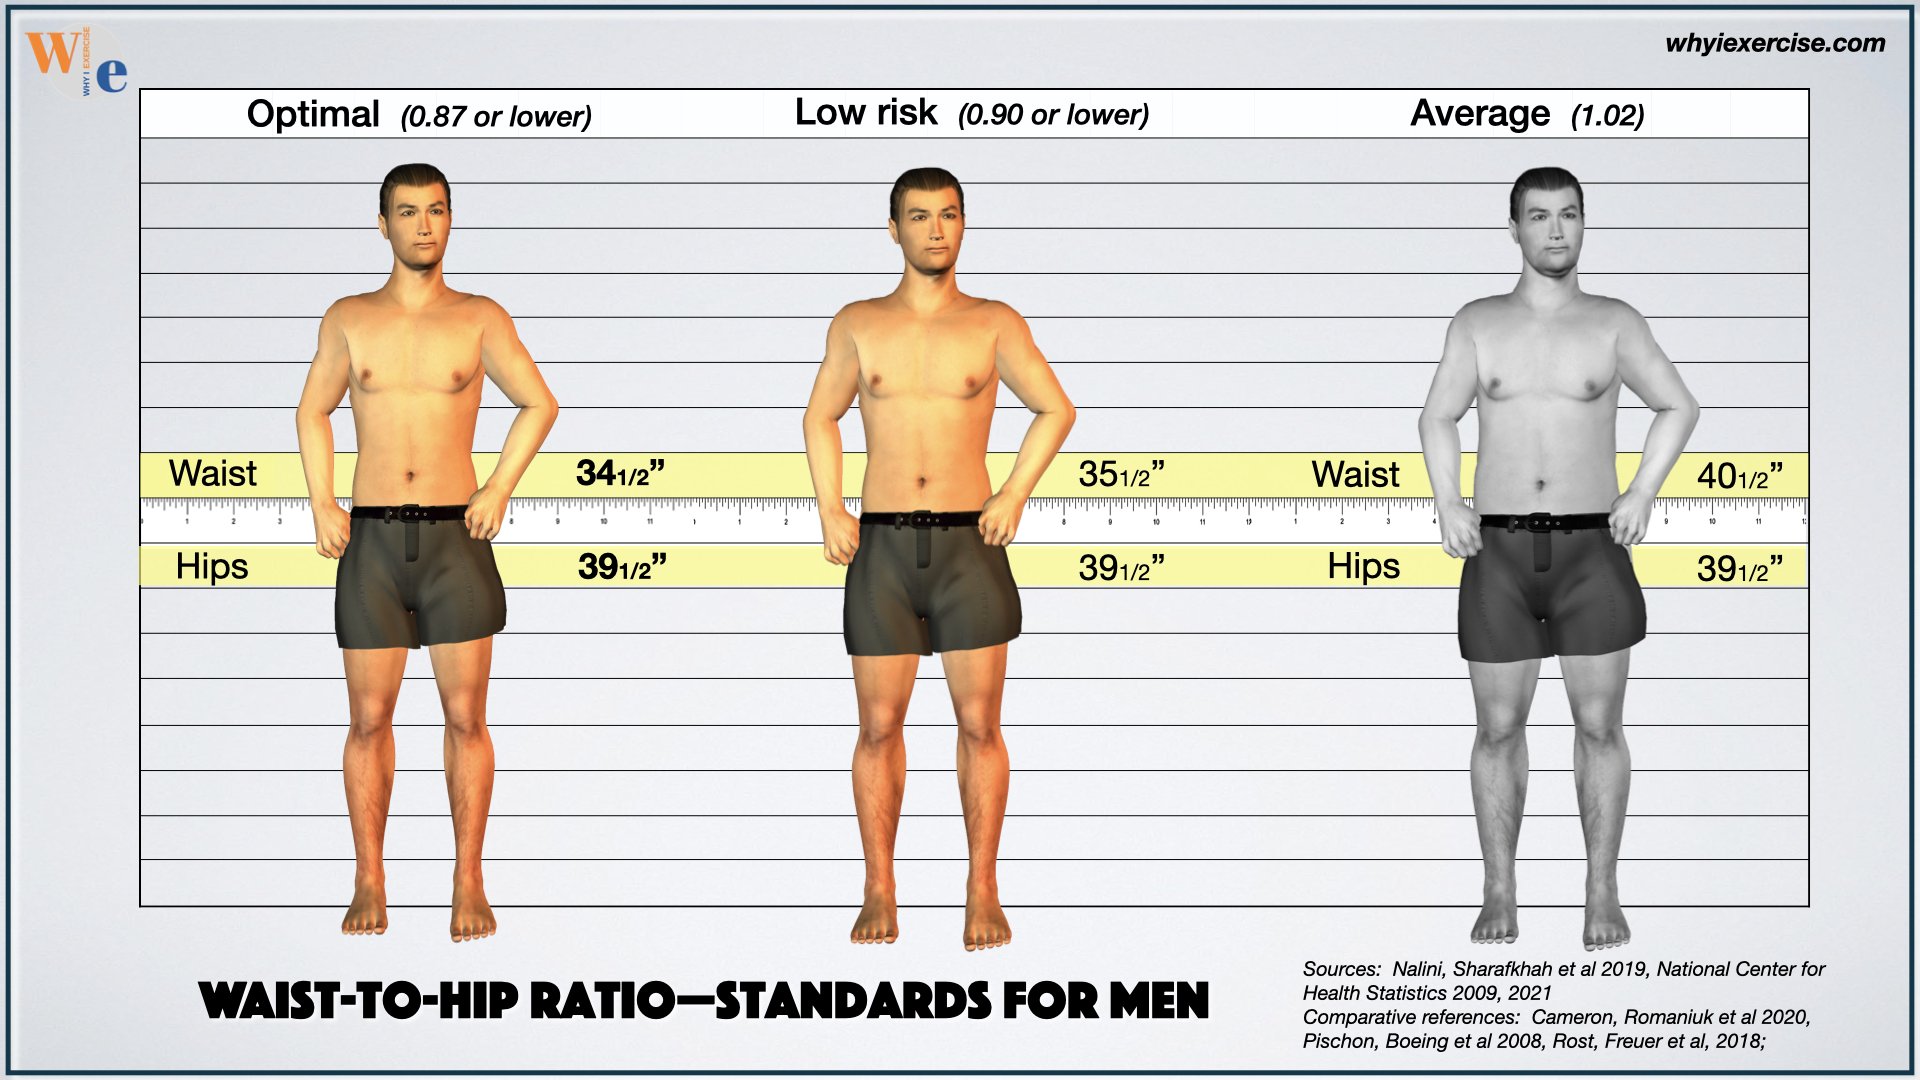 Waist-to-hip ratio, standards for men